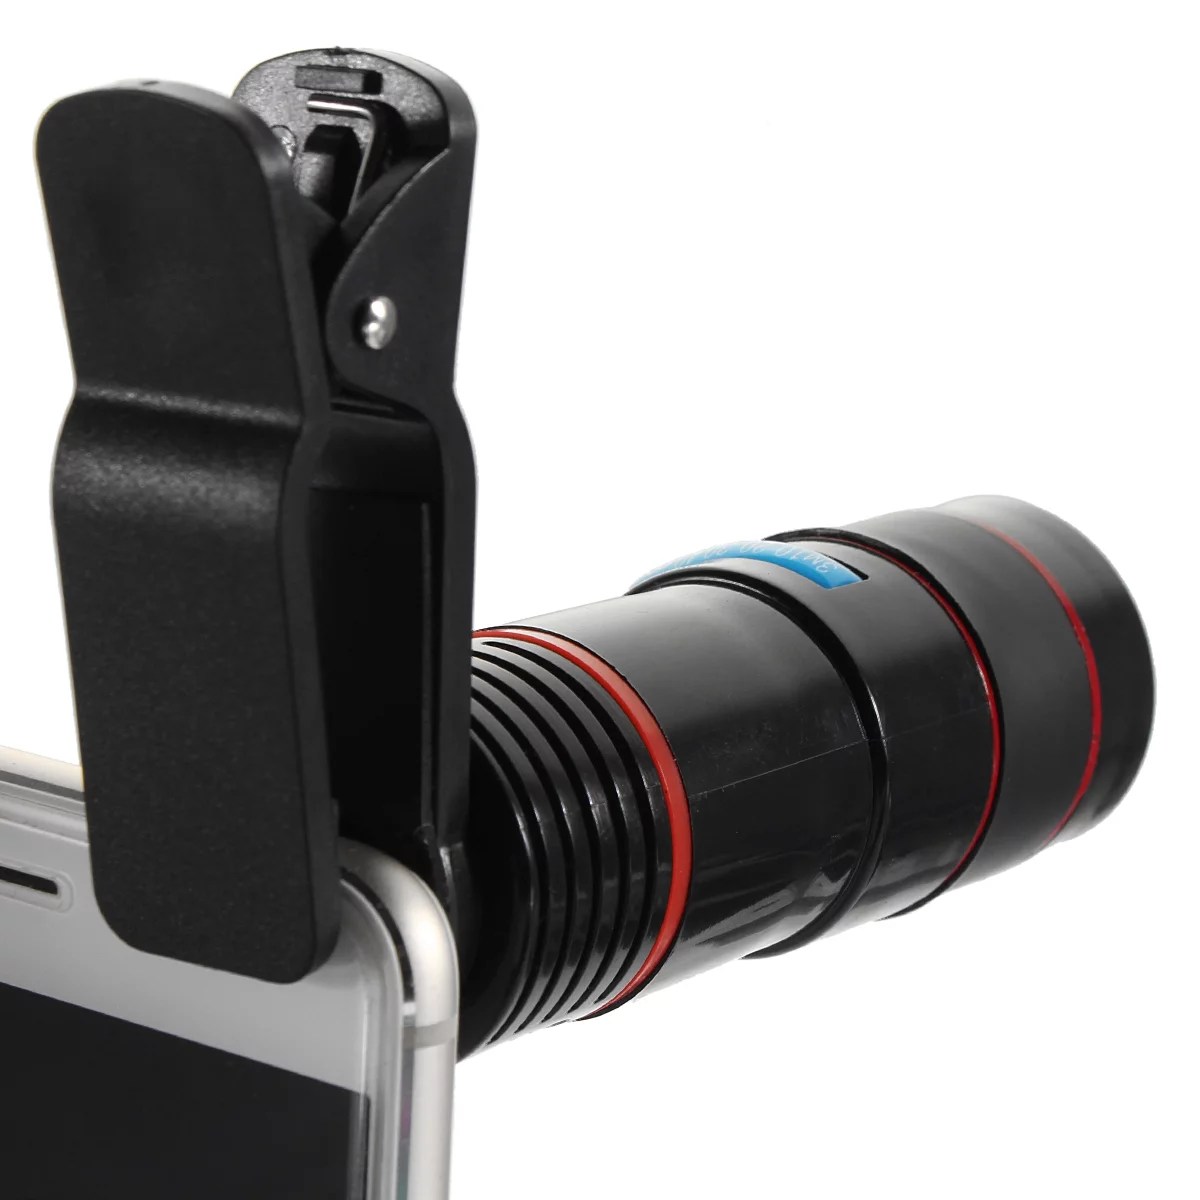 Cell Phone Camera Lens. 12X Zoom Telephoto Lens. Aluminum